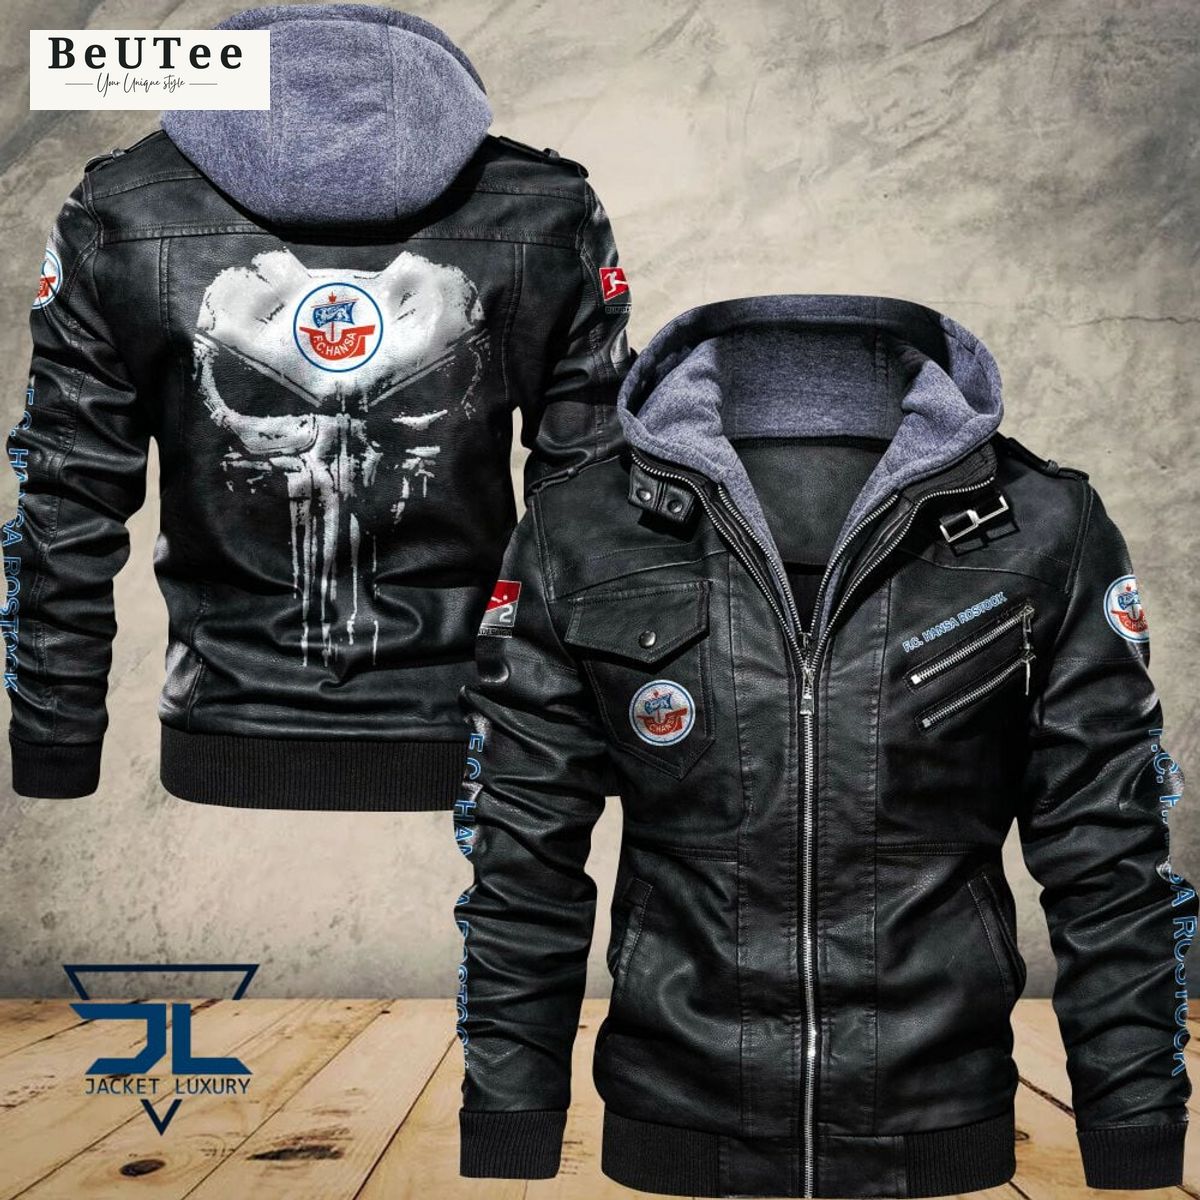 hansa rostock bundesliga germany league 2d leather jacket 1 1aNEa